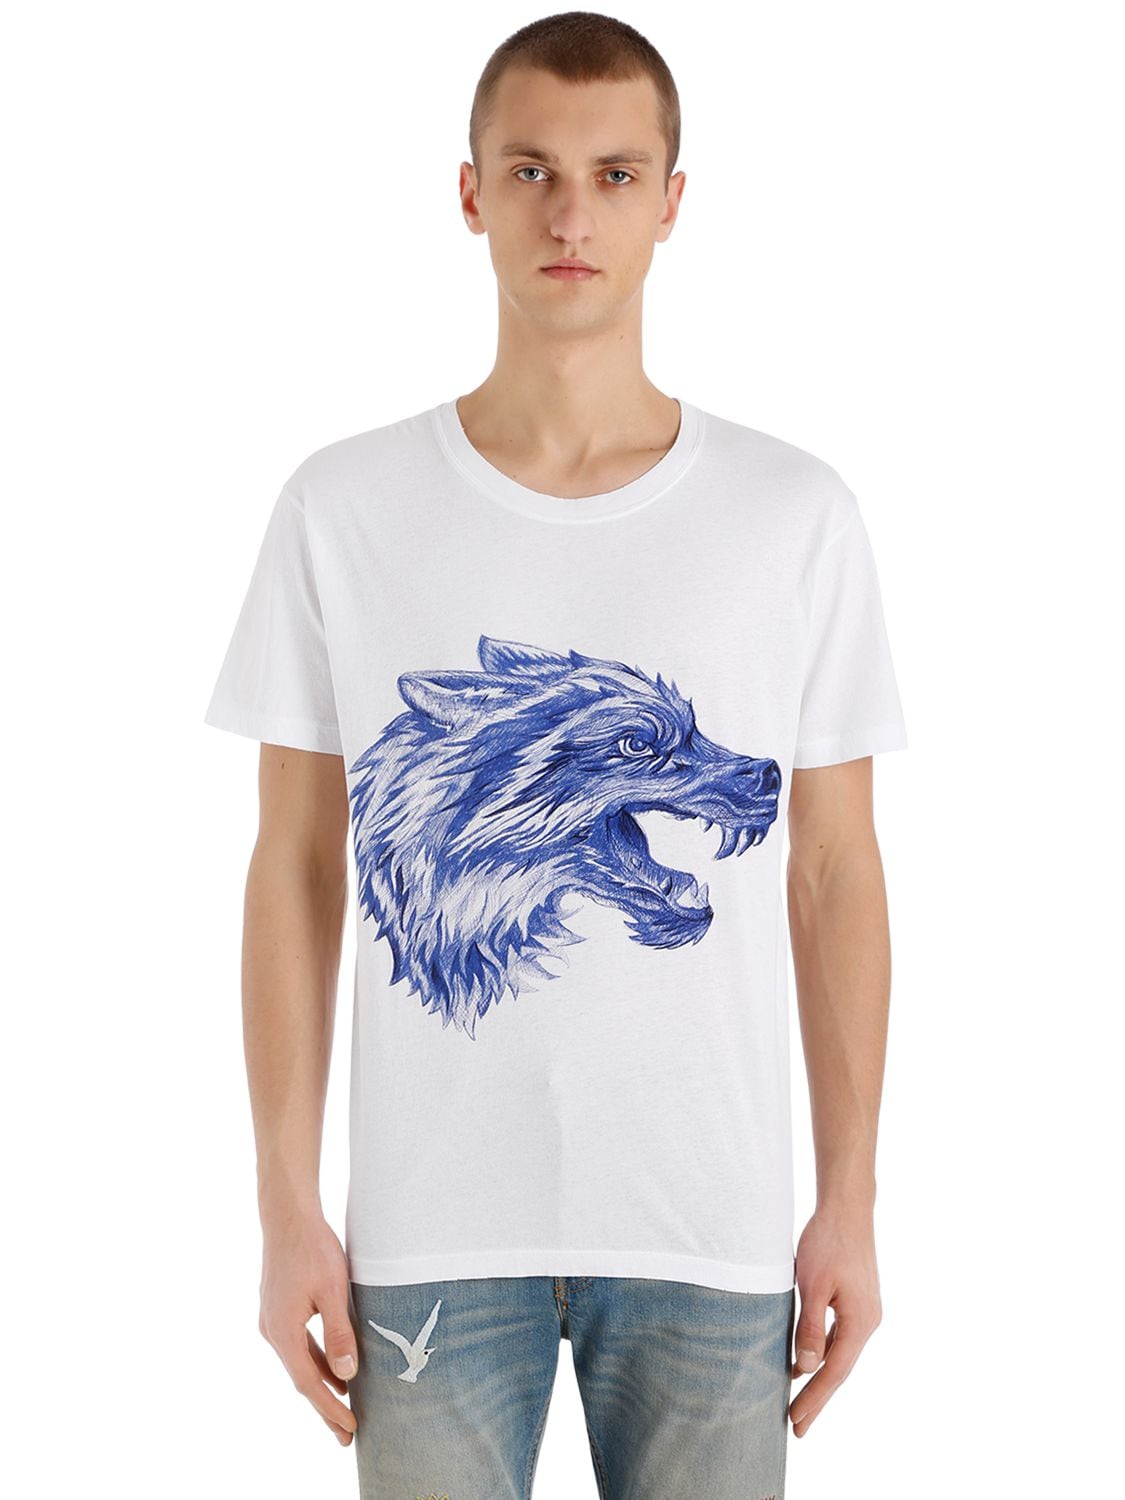 gucci wolves t shirt